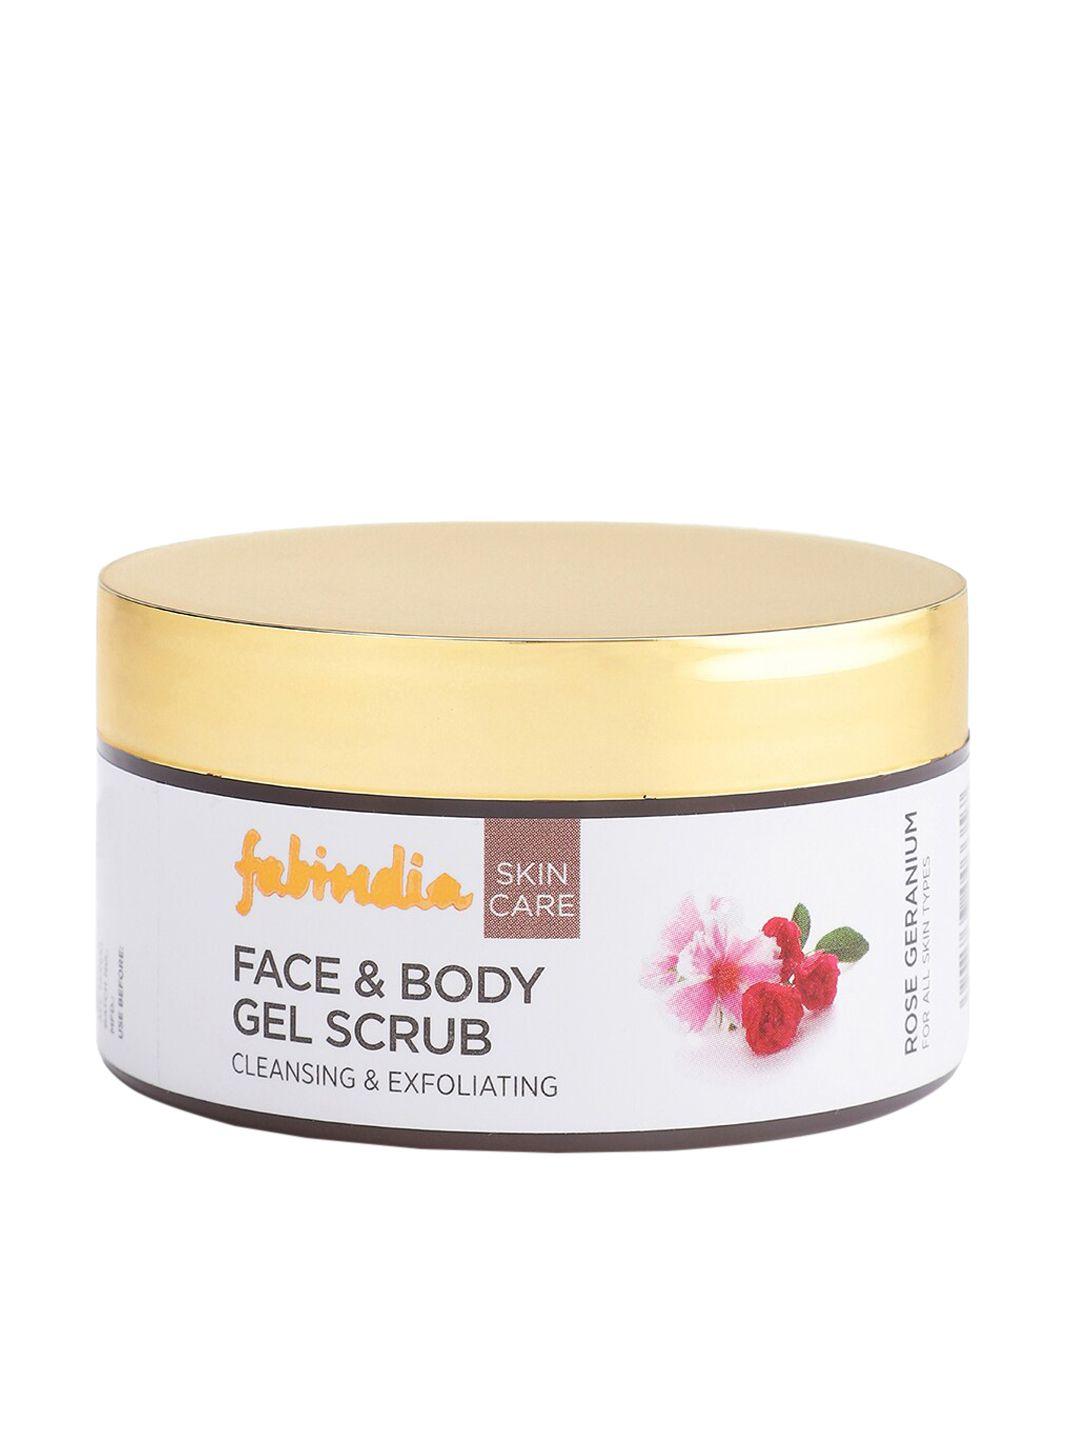 fabindia rose geranium face and body gel scrub